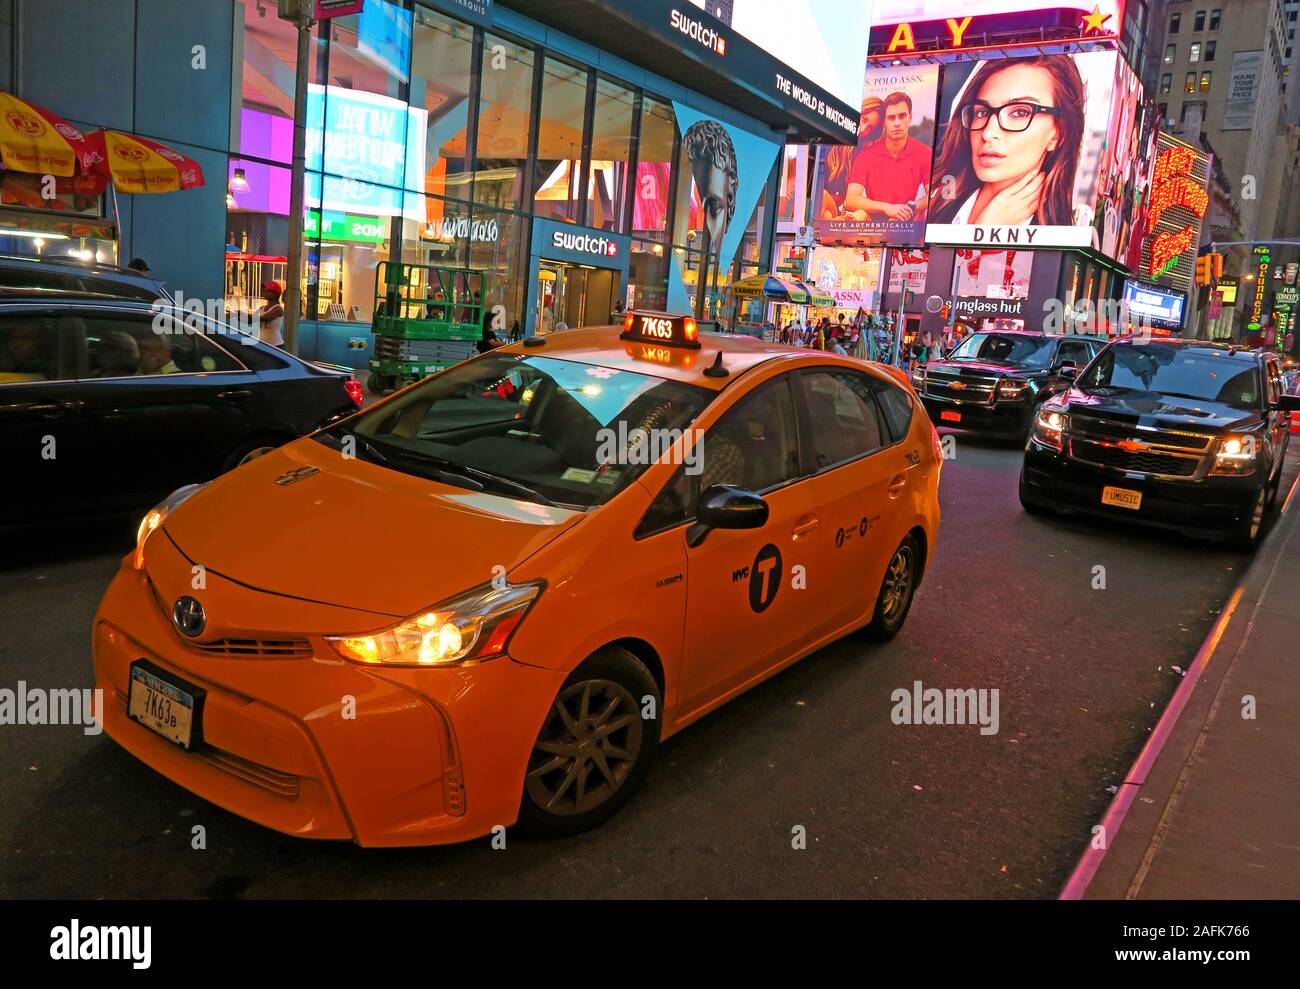 Yellow Cab 7K63, Times Square,Manhattan, New York City, NY Stock Photo